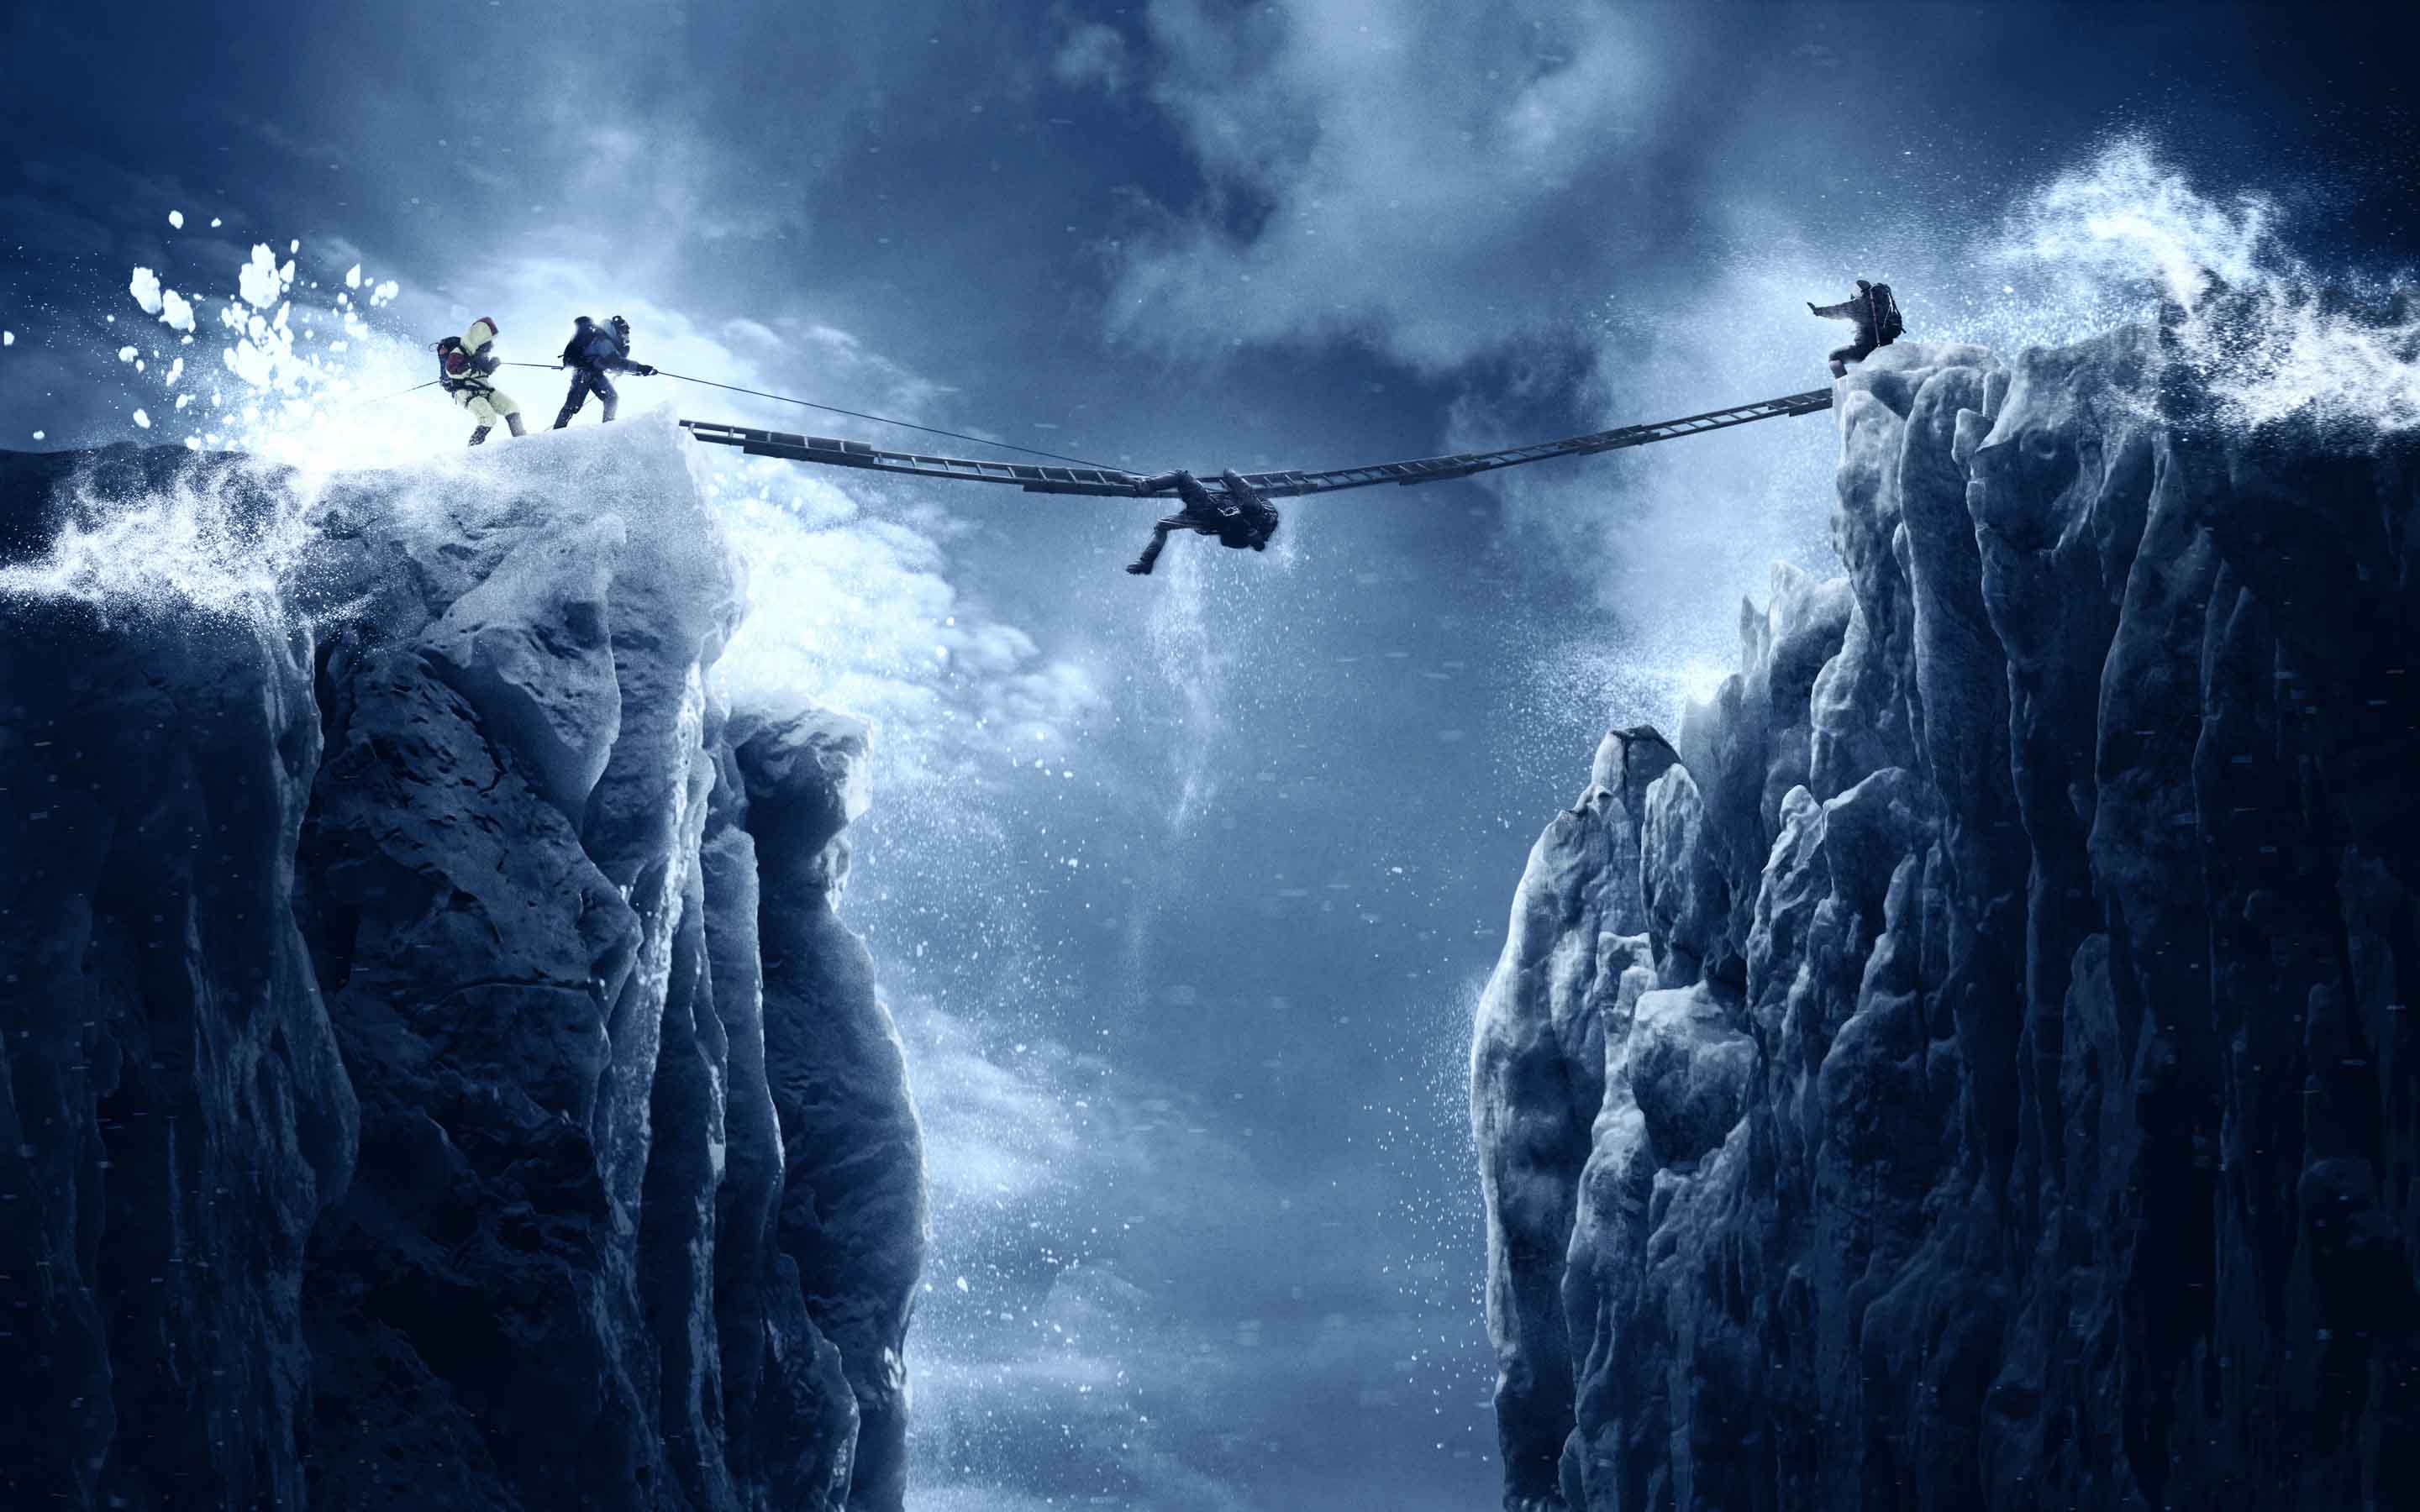 Mount Everest 2015 Movie Wallpaper - DreamLoveWallpapers